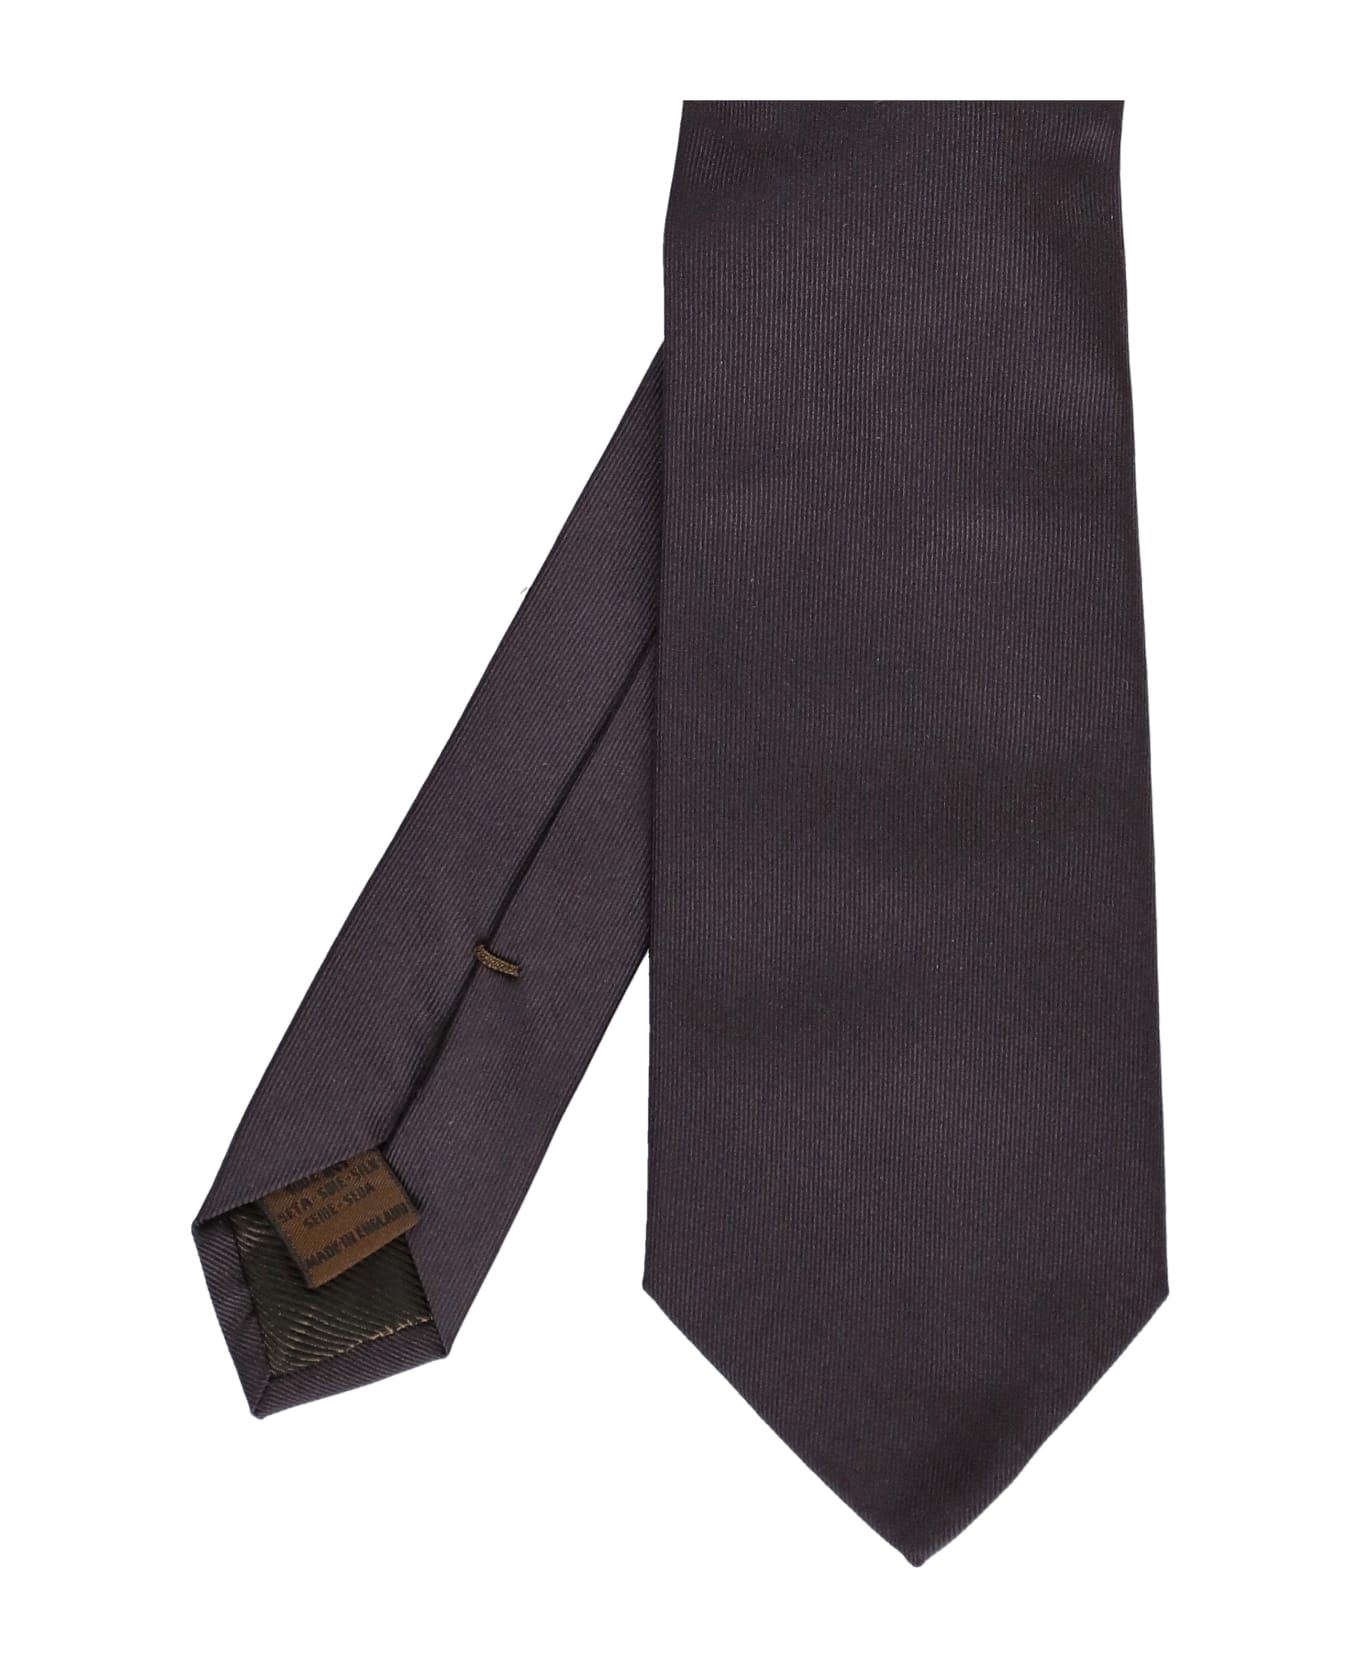 Church's Silk Tie - Purple